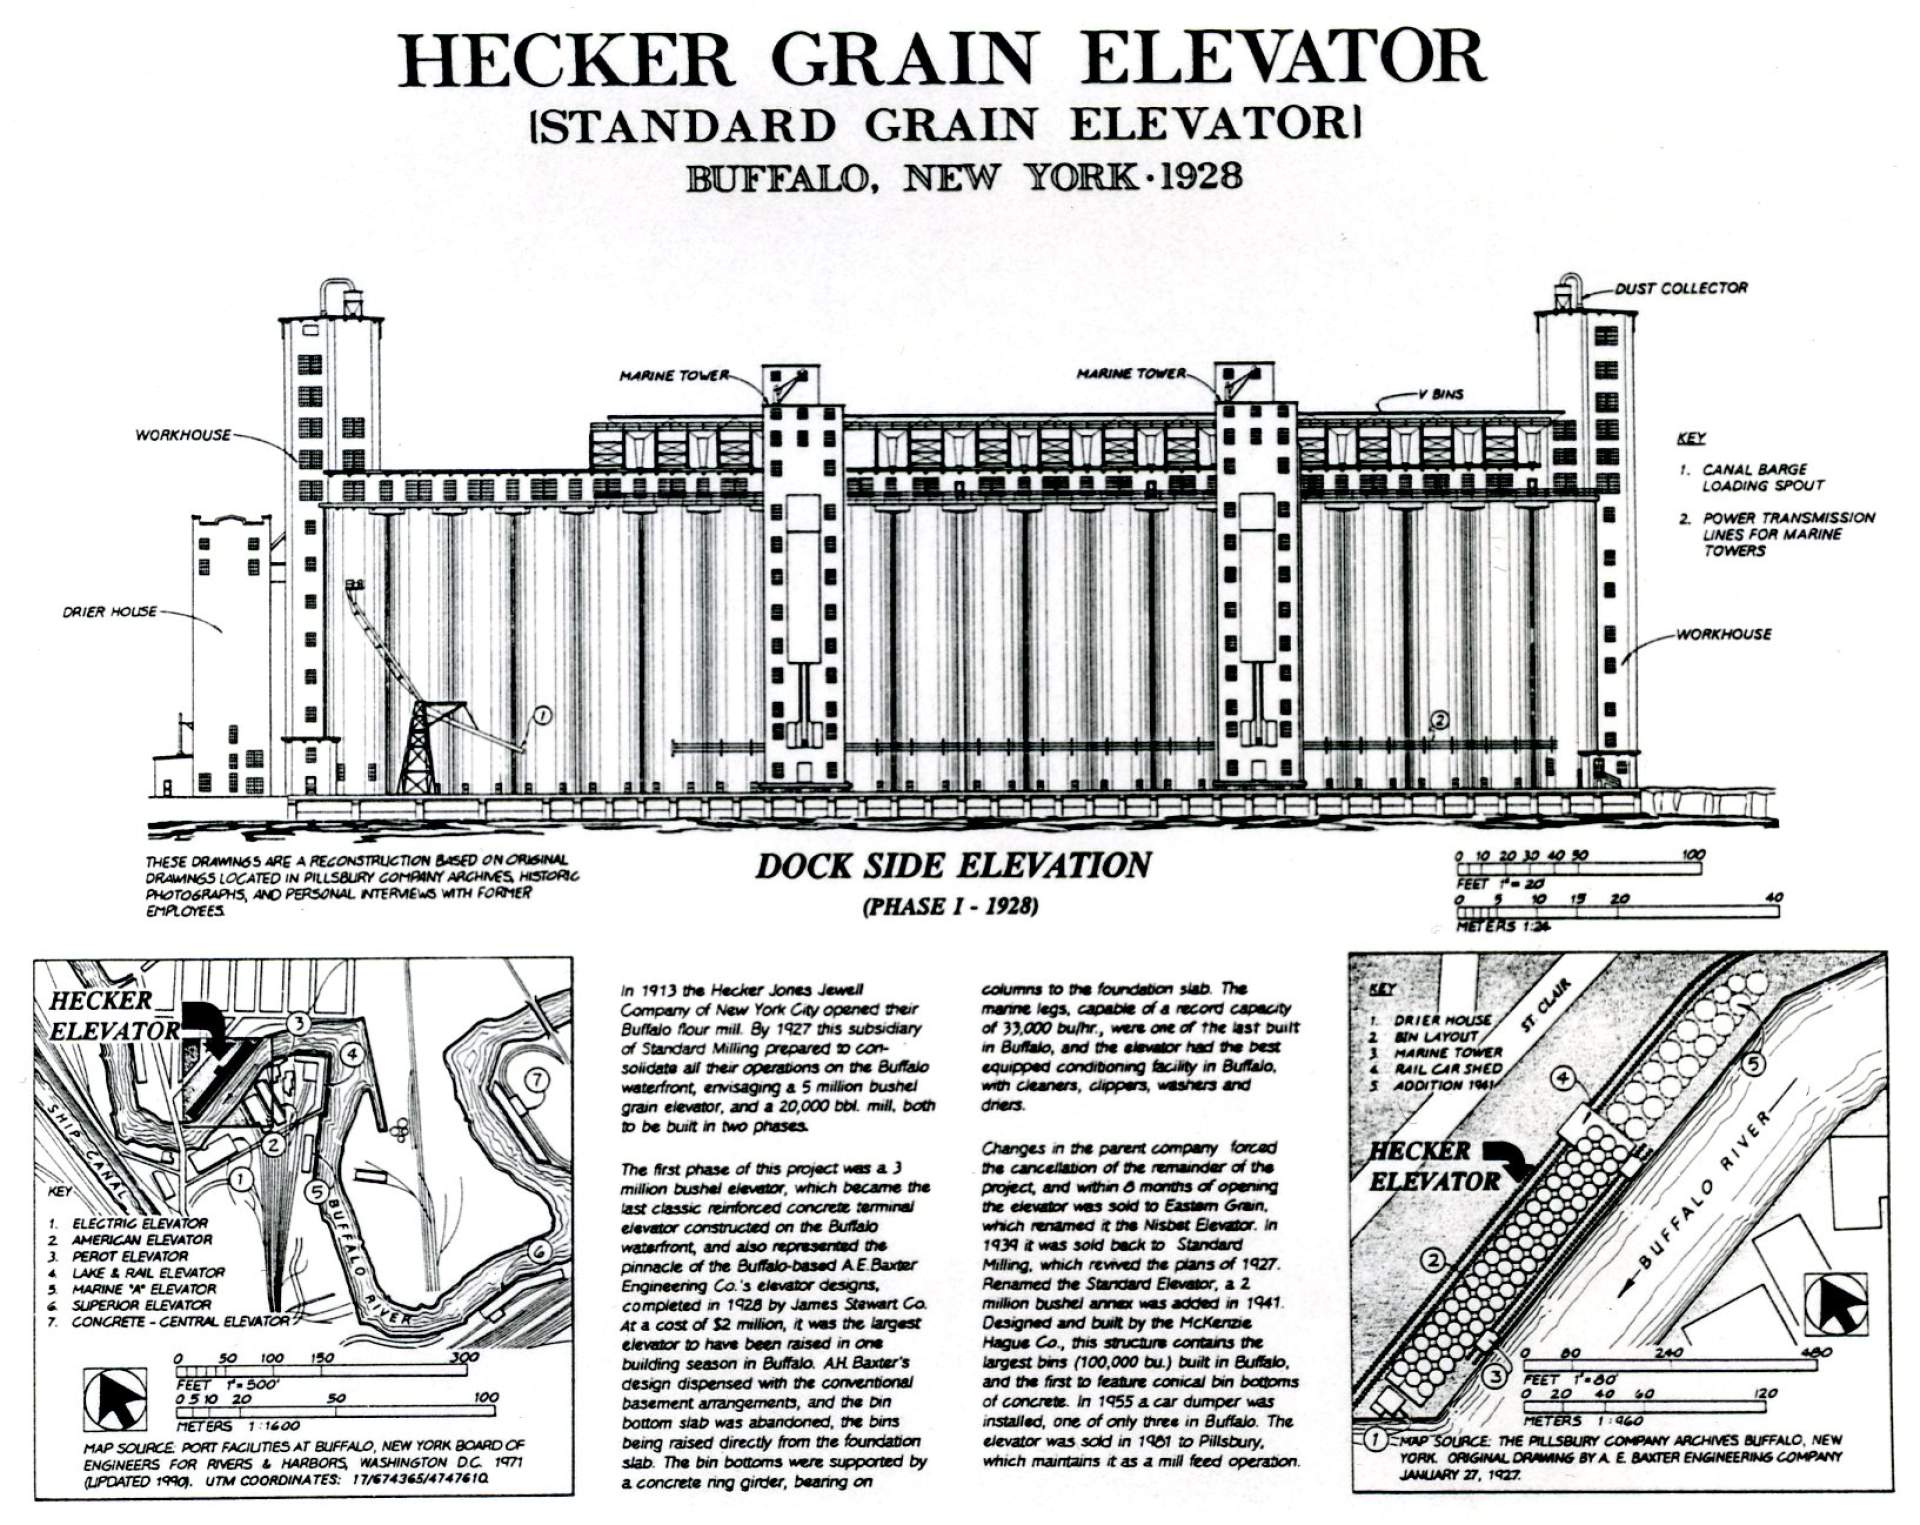 Elevation of Hecker Grain Elevator